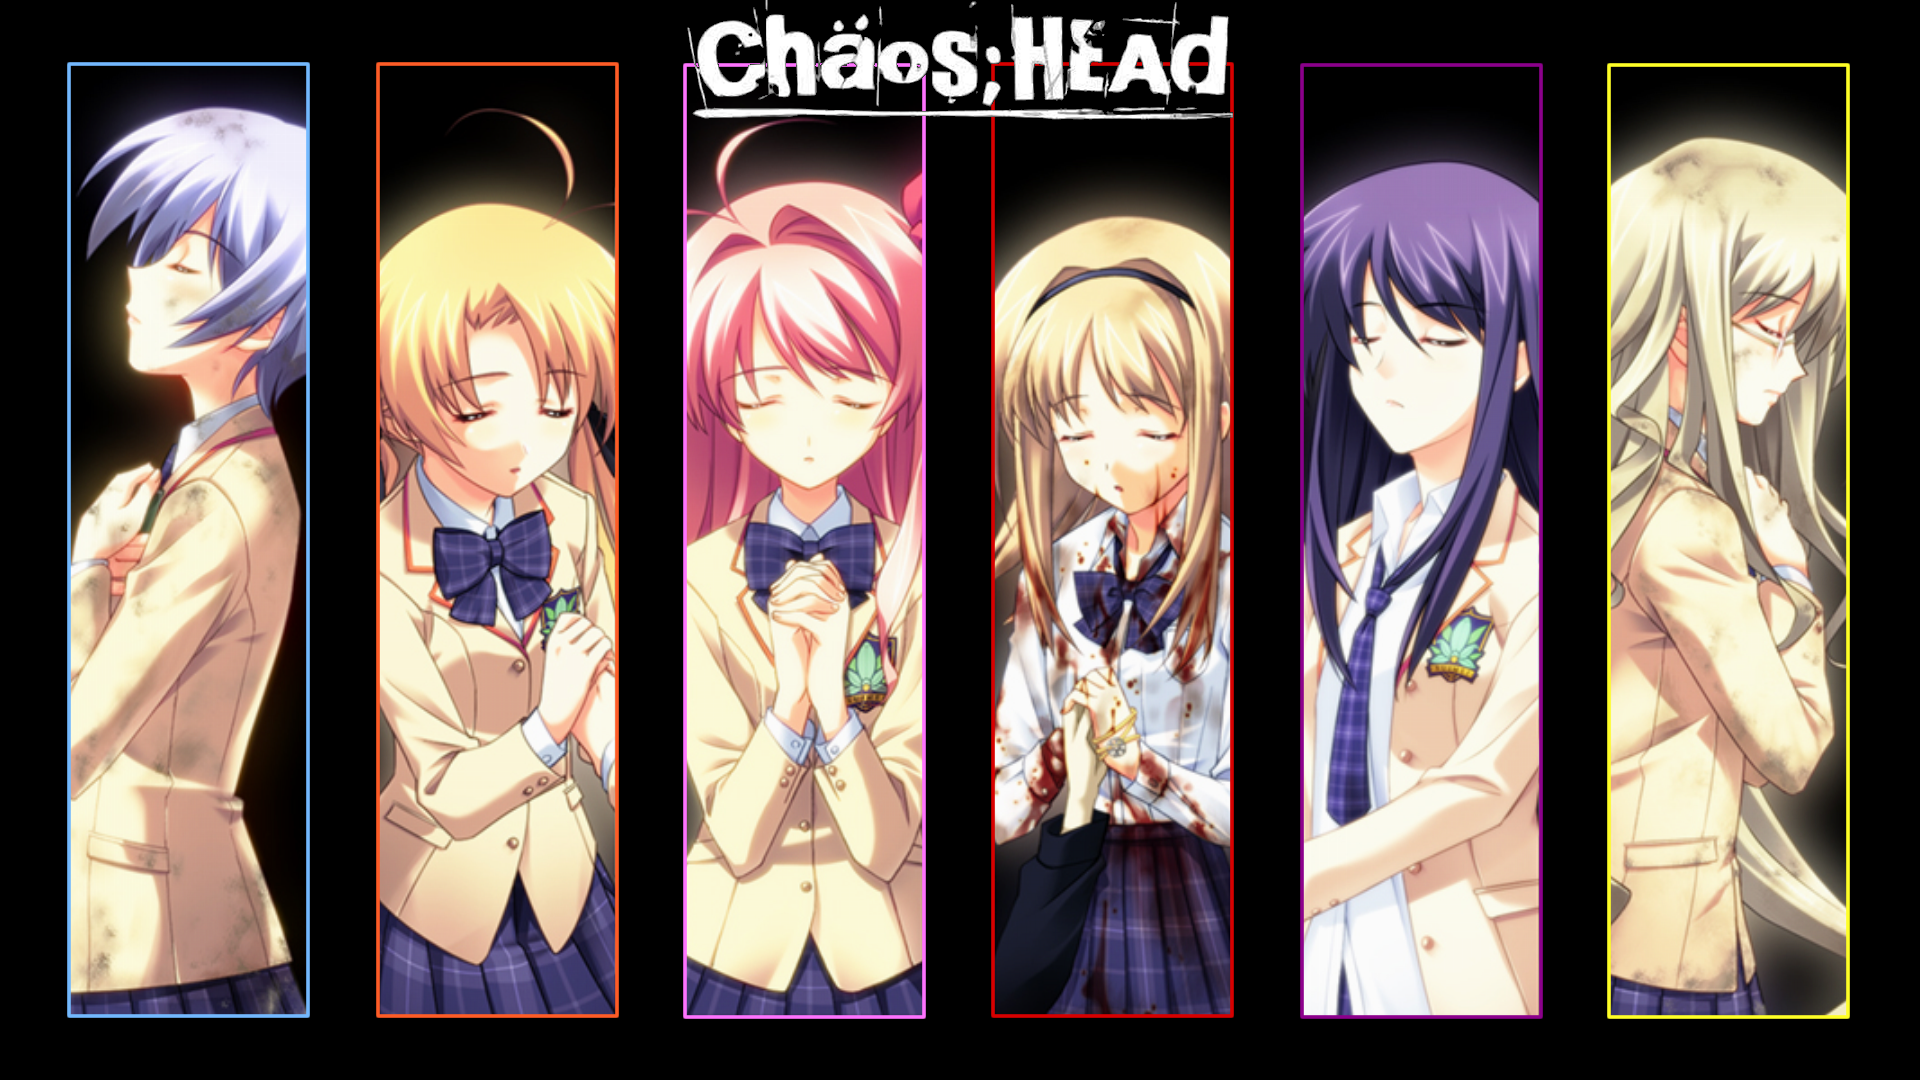 Chaos head wallpaper